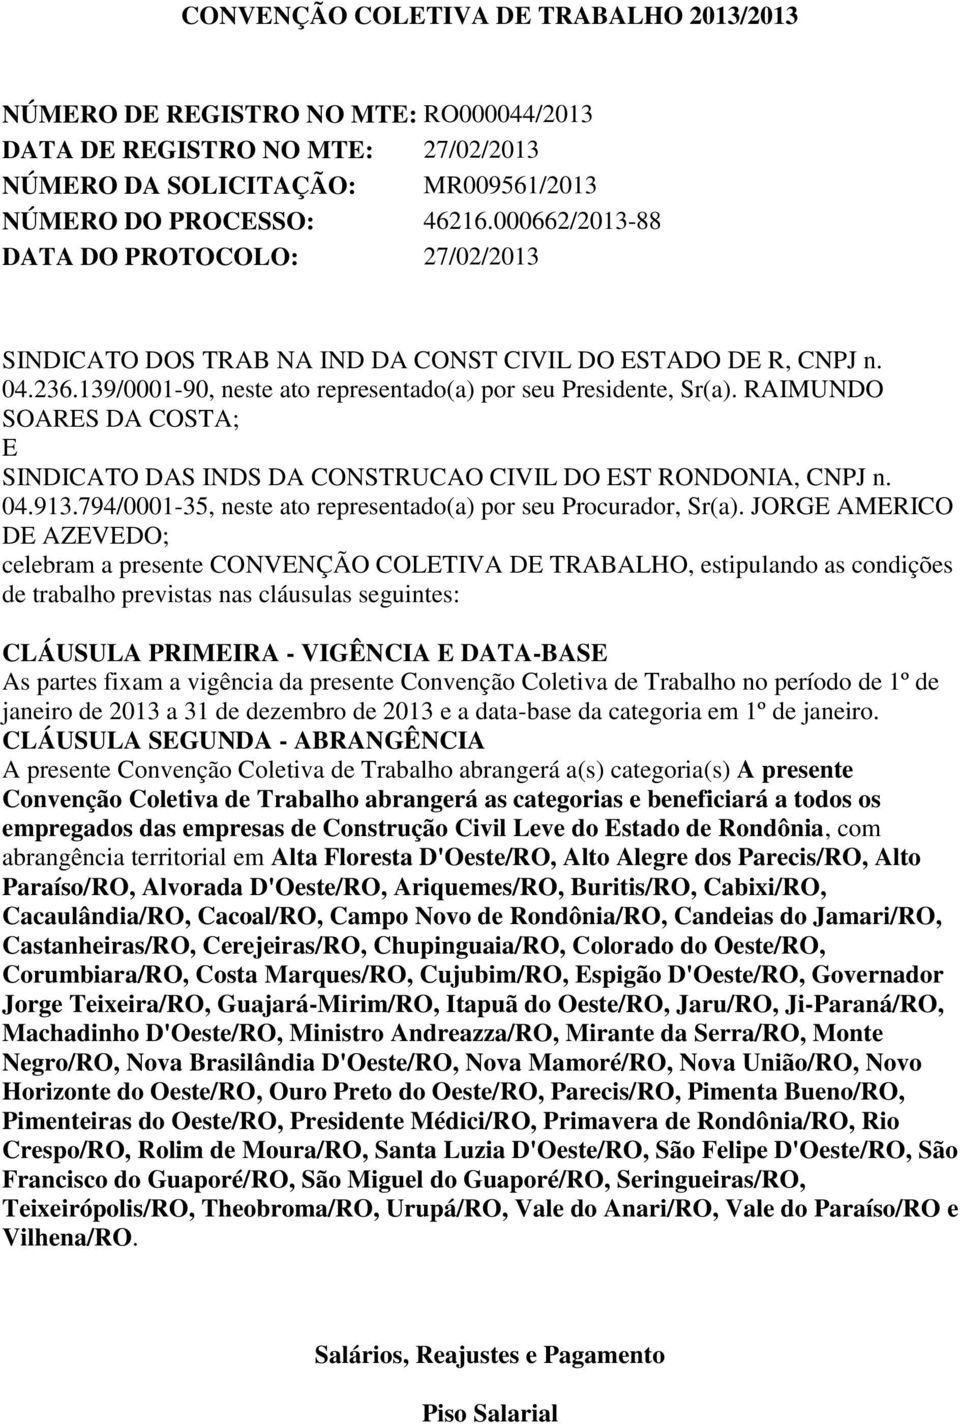 RAIMUNDO SOARES DA COSTA; E SINDICATO DAS INDS DA CONSTRUCAO CIVIL DO EST RONDONIA, CNPJ n. 04.913.794/0001-35, neste ato representado(a) por seu Procurador, Sr(a).